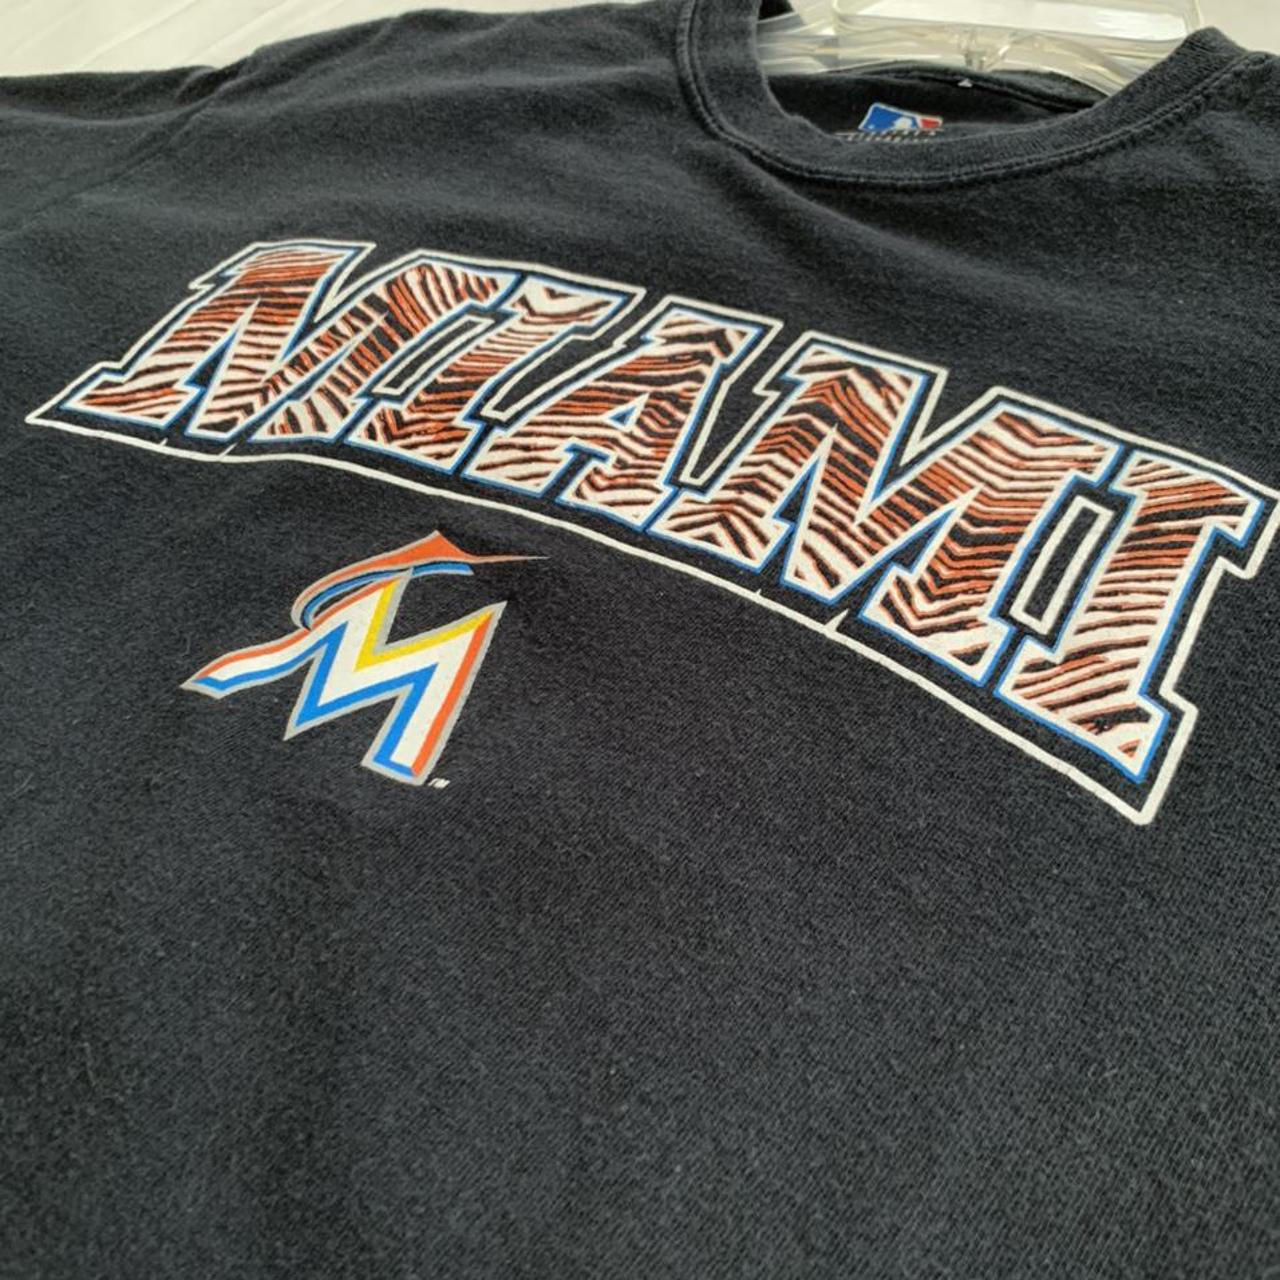 Vintage Miami Marlins T-Shirt 